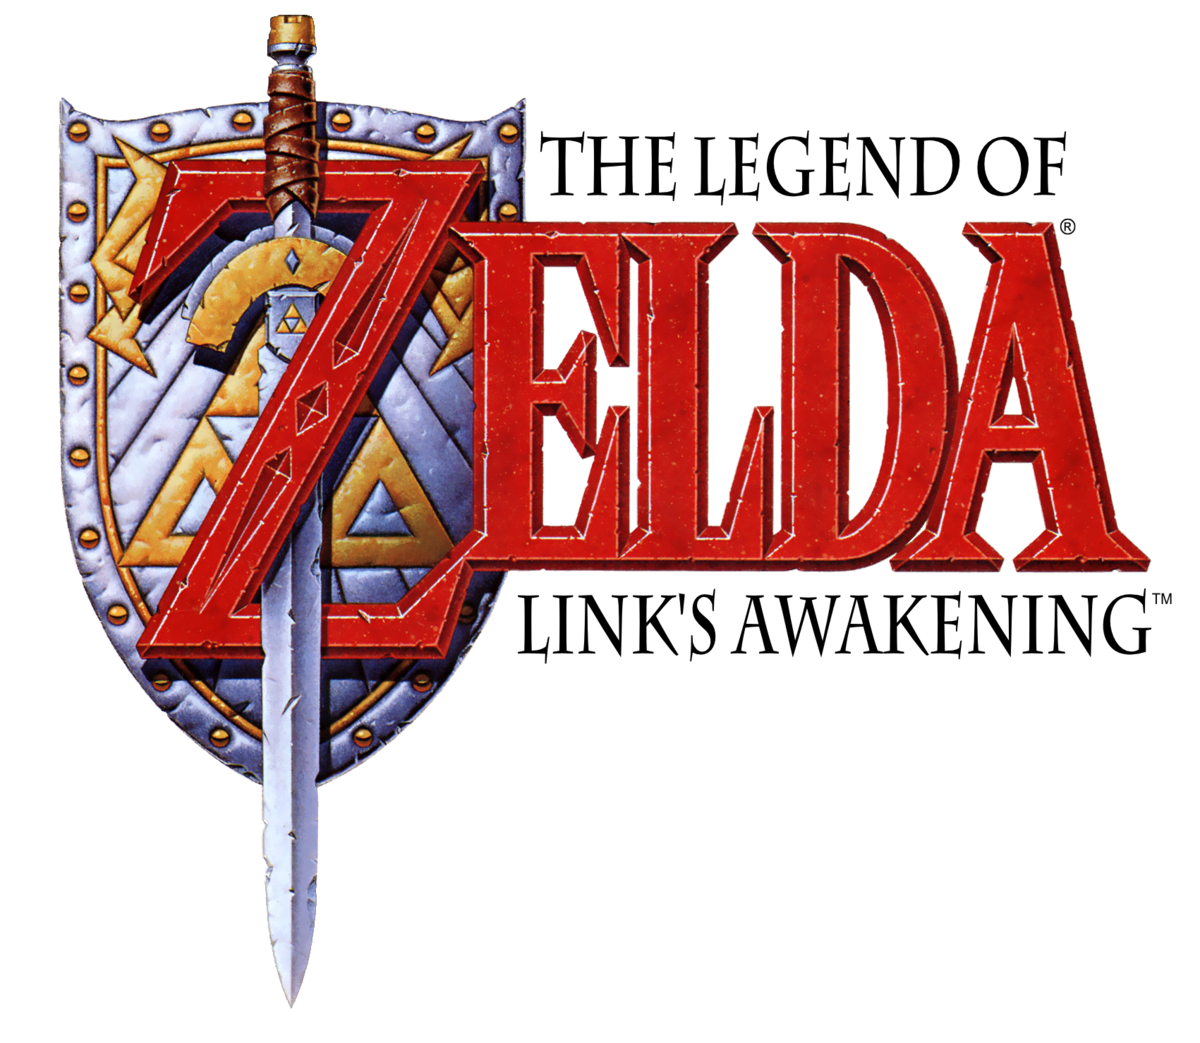 Zelda: TOTK developers on saying goodbye to the Switch, Zelda's future -  Polygon